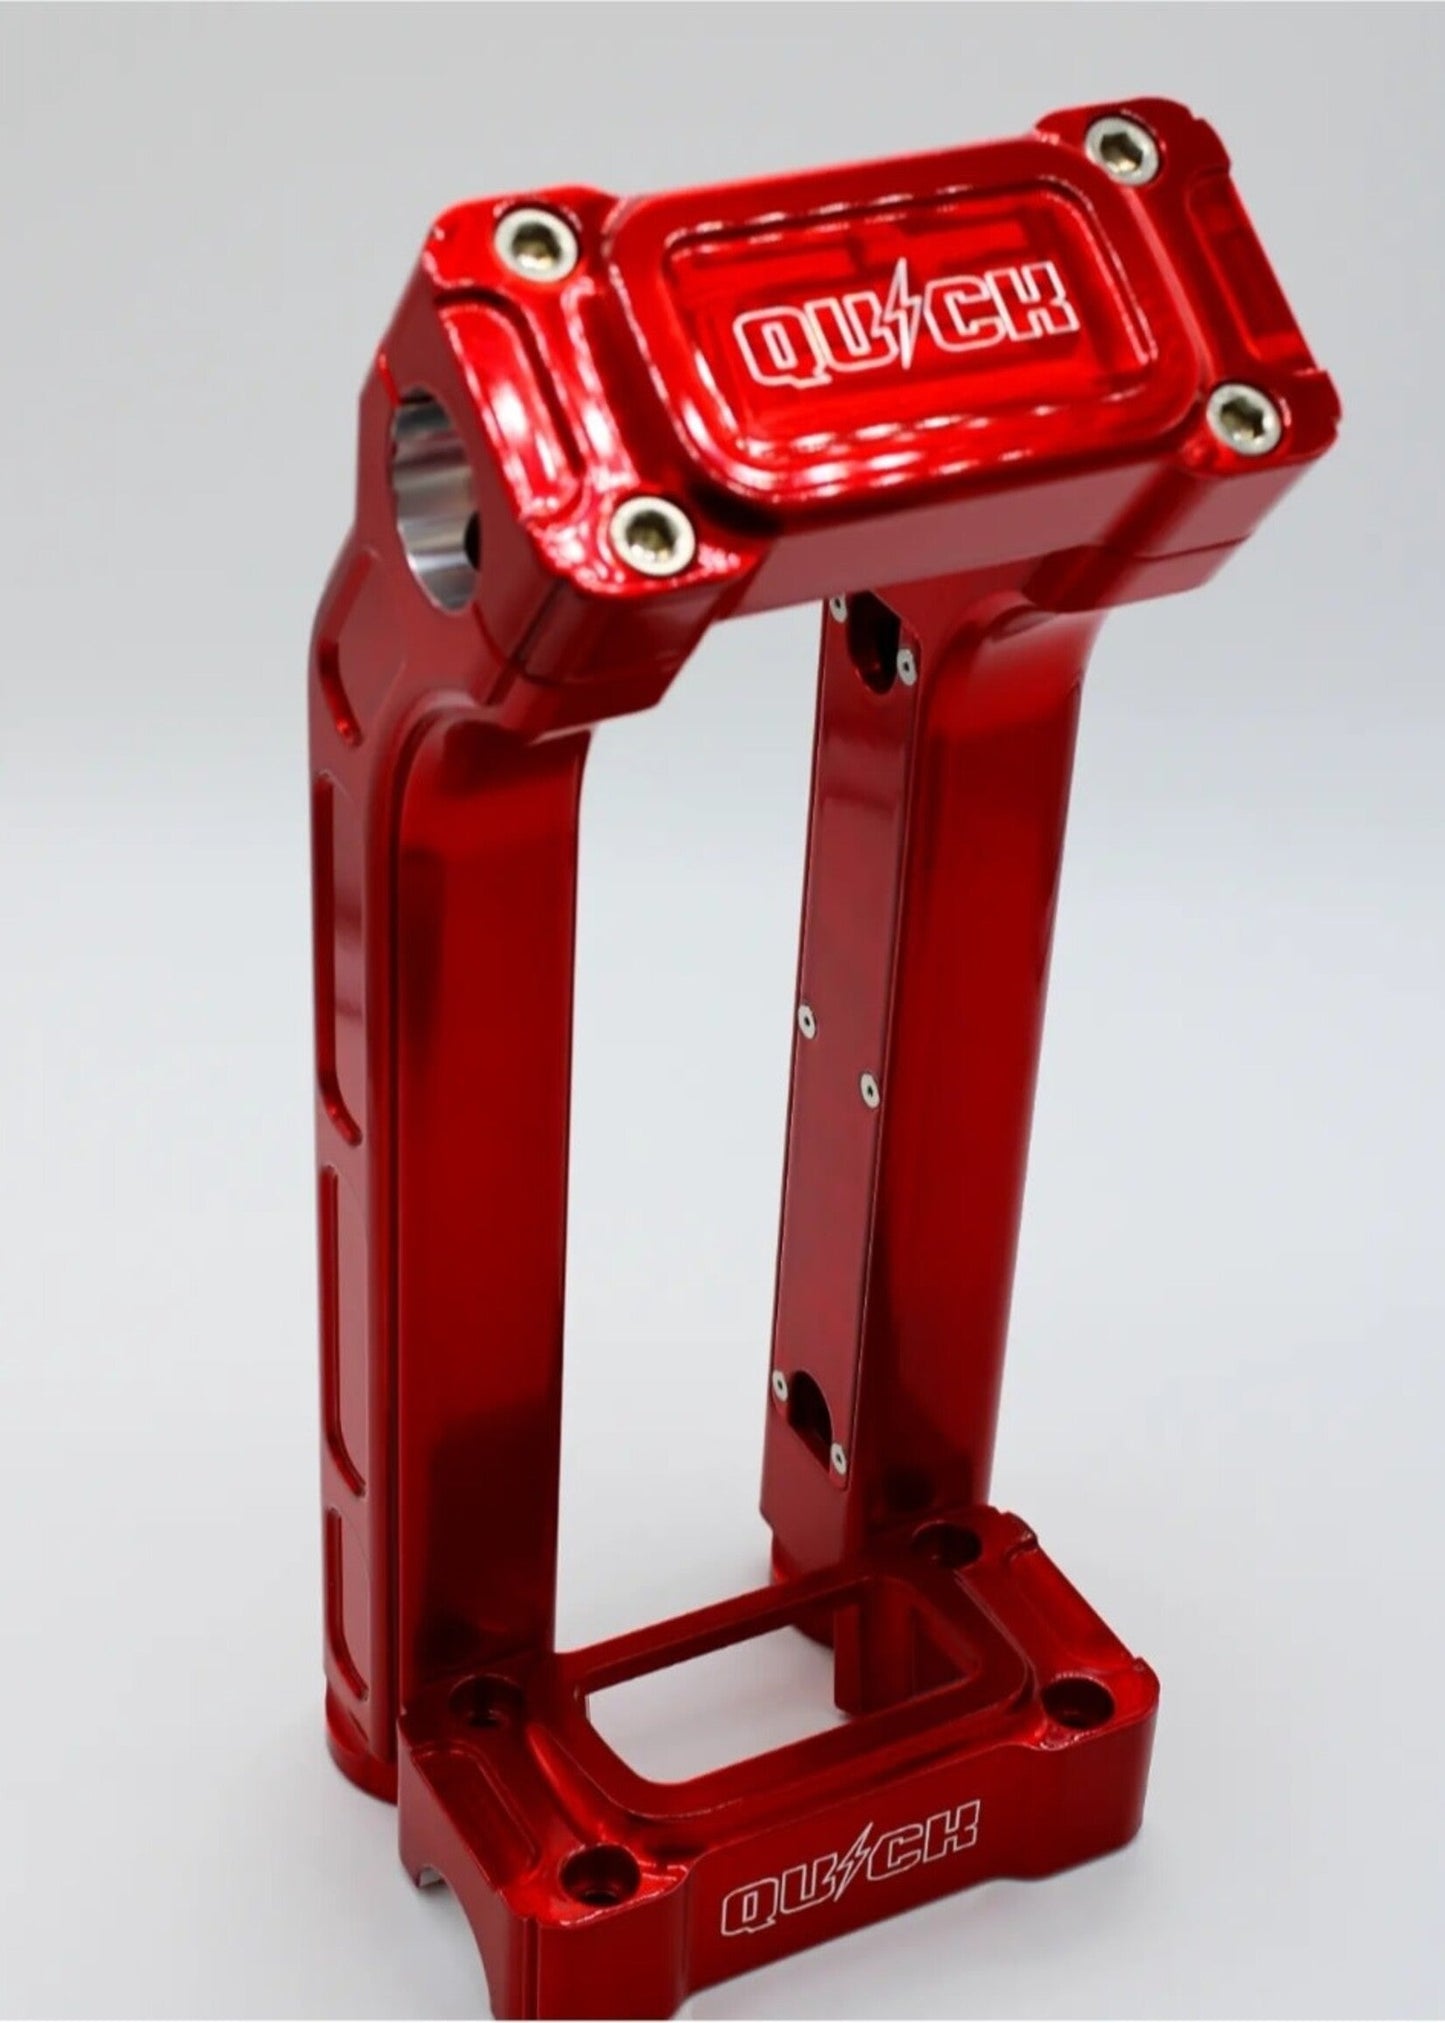 Quick Industries Pullback Riser & Koso Digital Gauge Kit